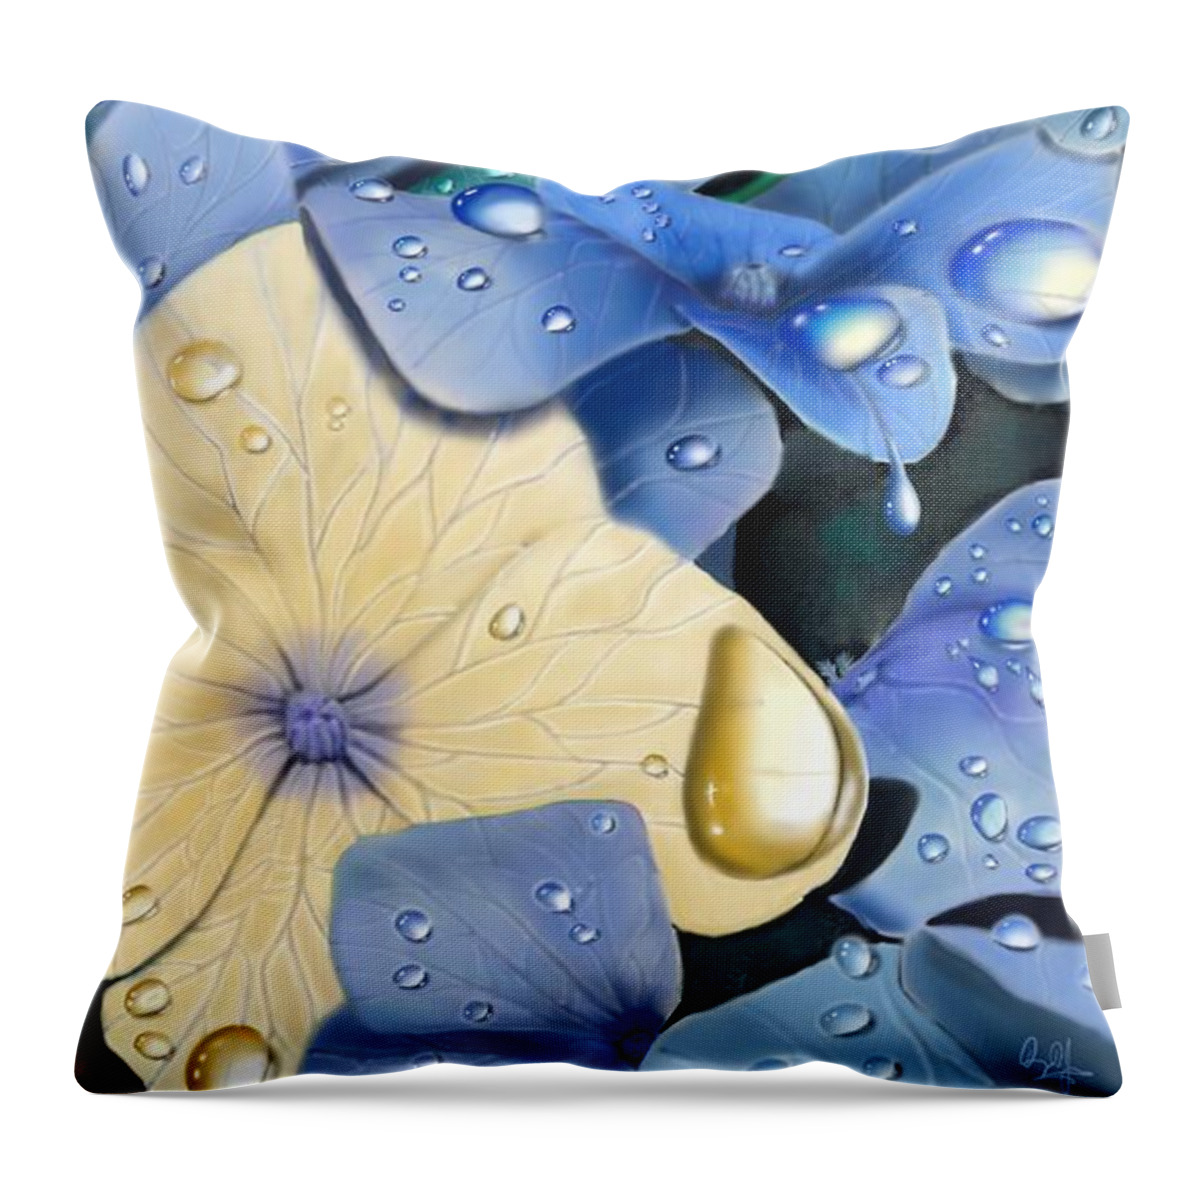 Plants Throw Pillow featuring the digital art Blue Hydrangeas by Douglas Day Jones